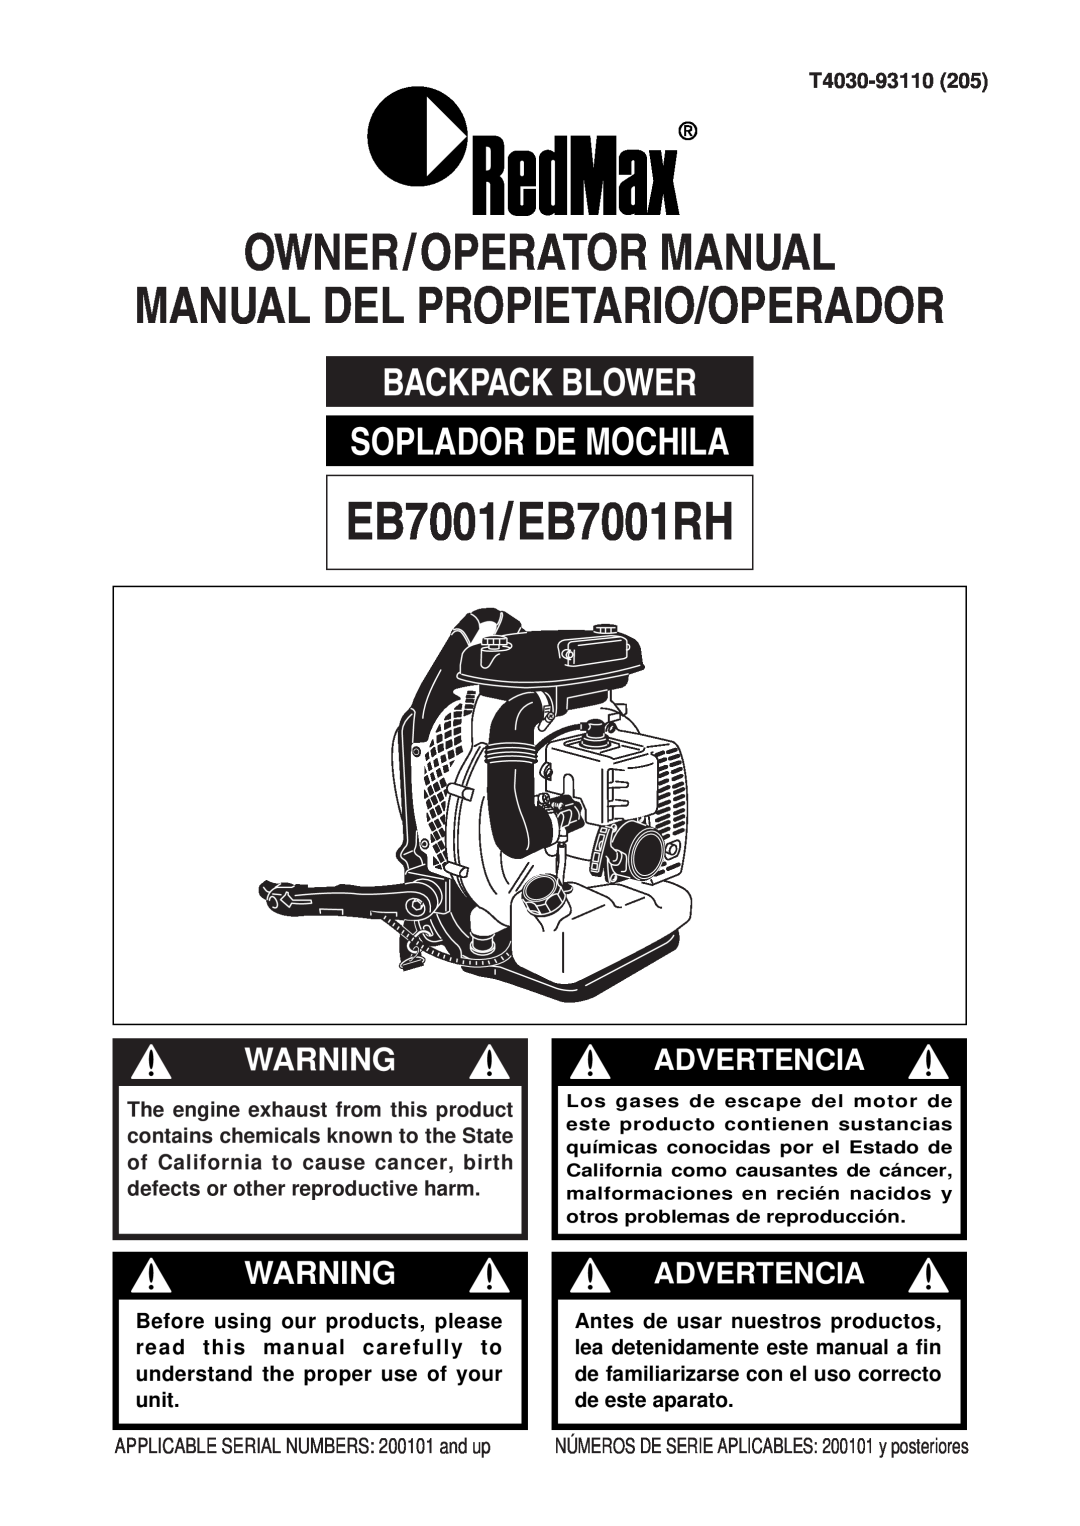 RedMax manual EB7001/ EB7001RH, Owner/Operator Manual, Backpack Blower Soplador De Mochila, T4030-93110, Advertencia 